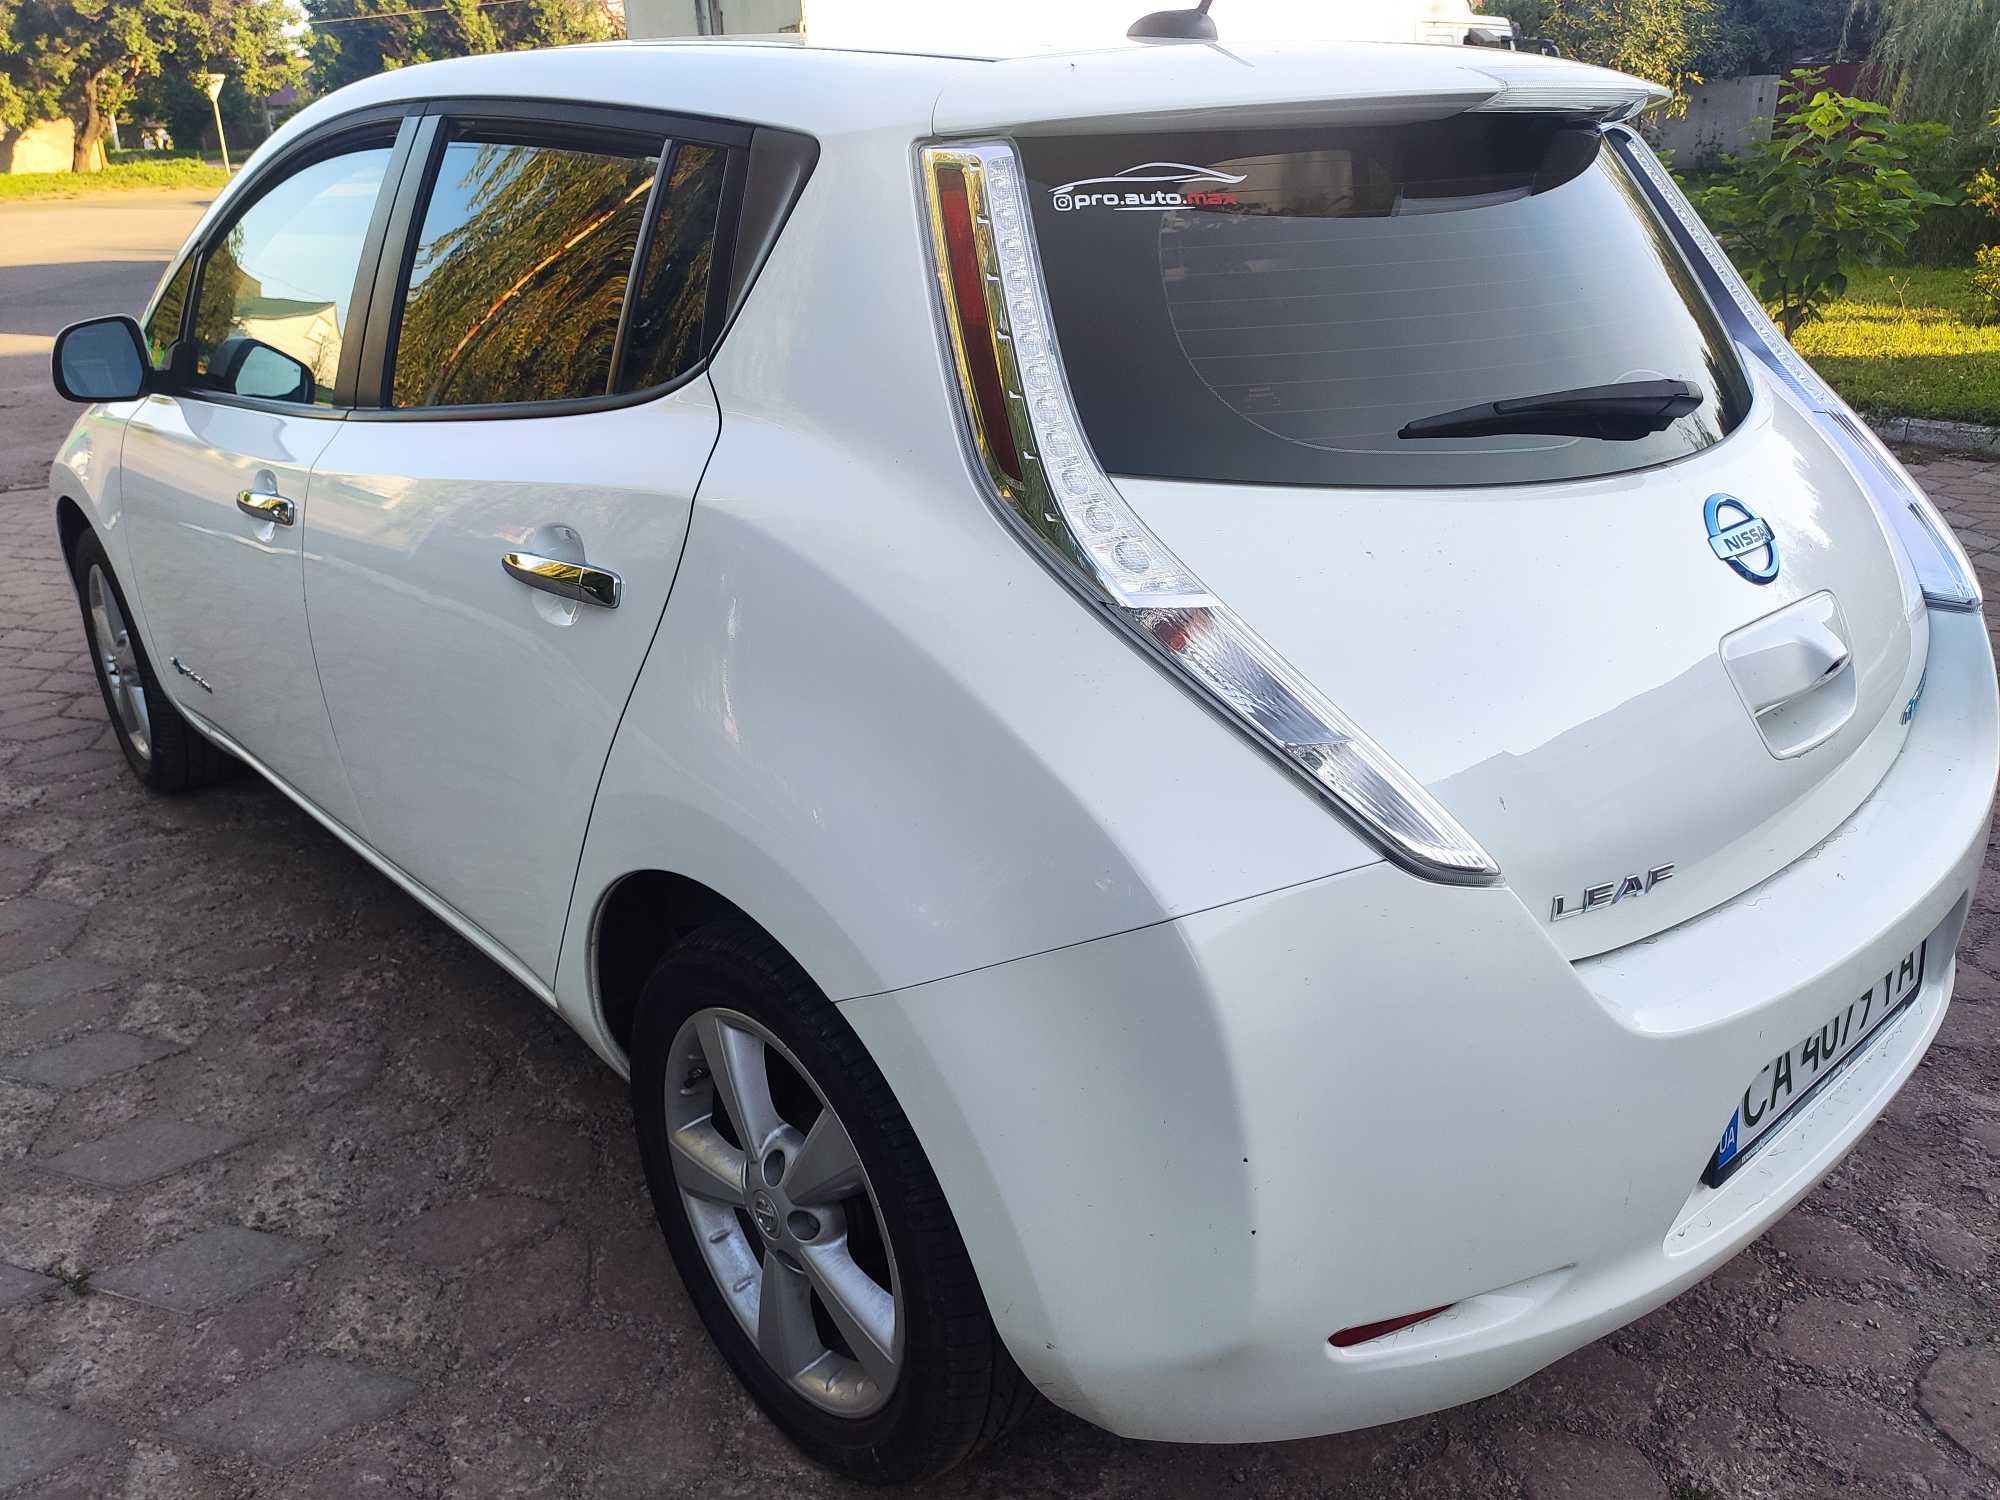 Nissan Leaf, Європа, 2014, 24 кВт, 83soh, 130-140 км., 80 т.км. пробіг